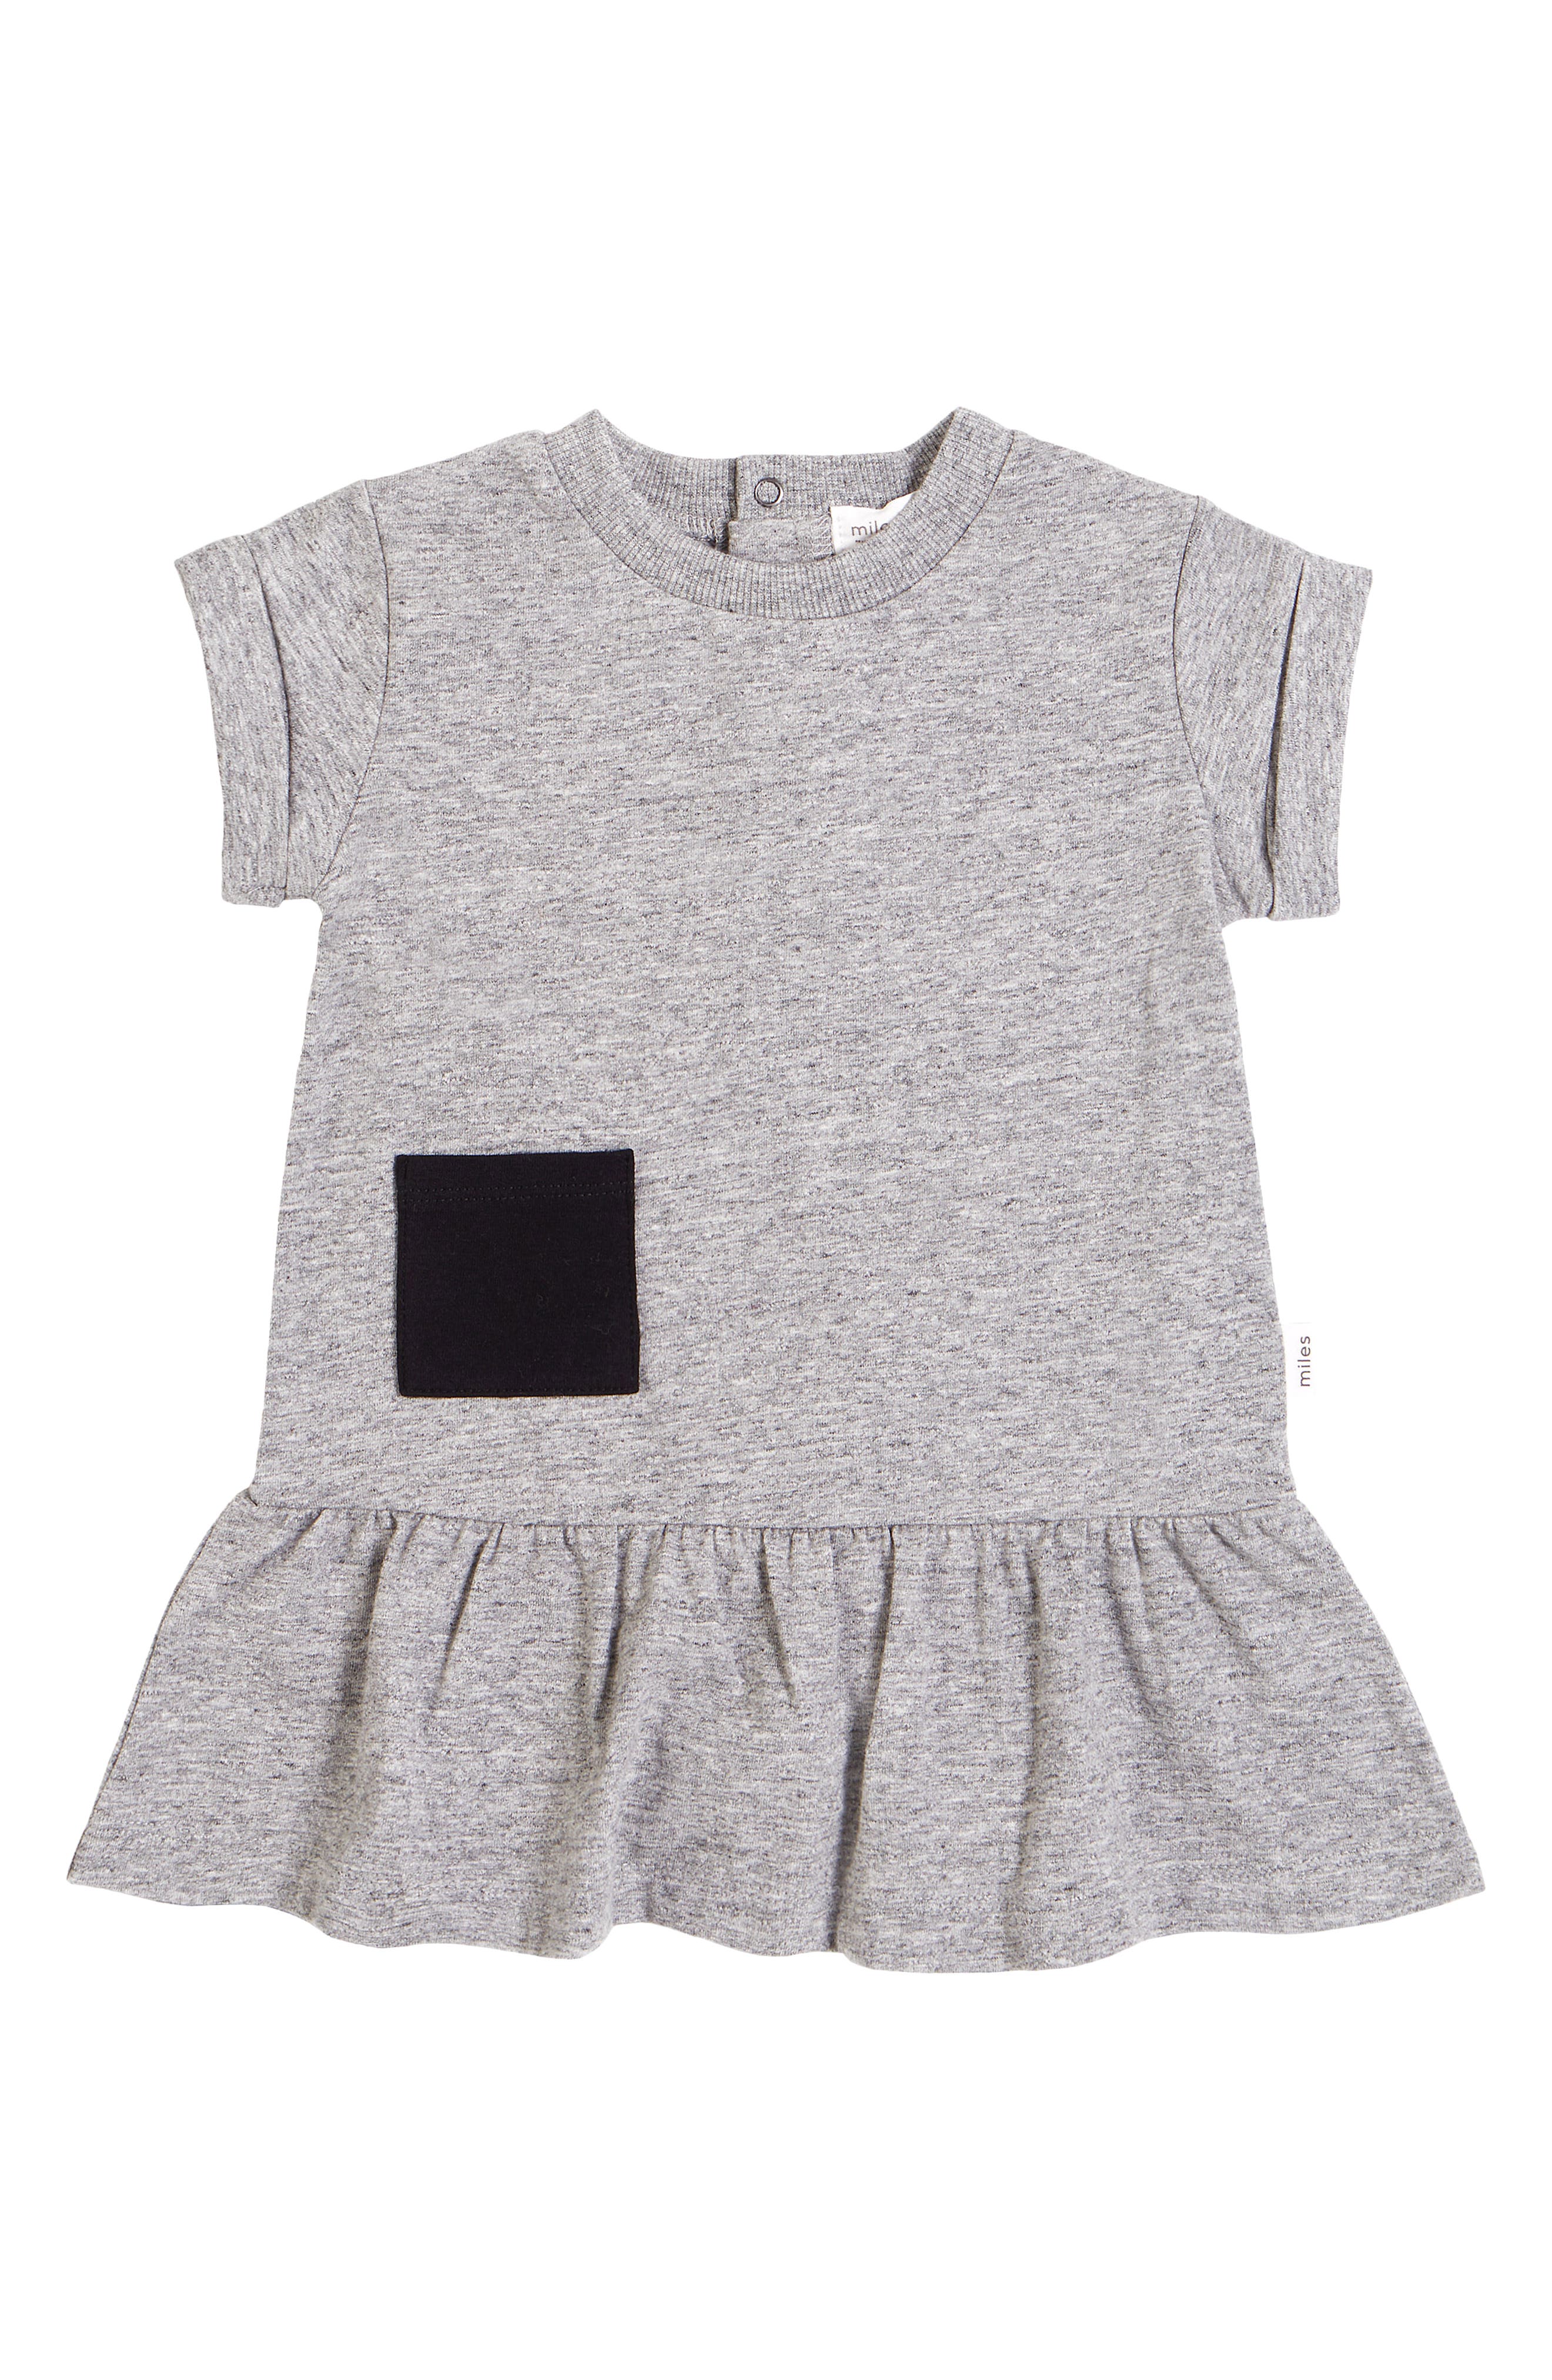 grey baby girl clothes